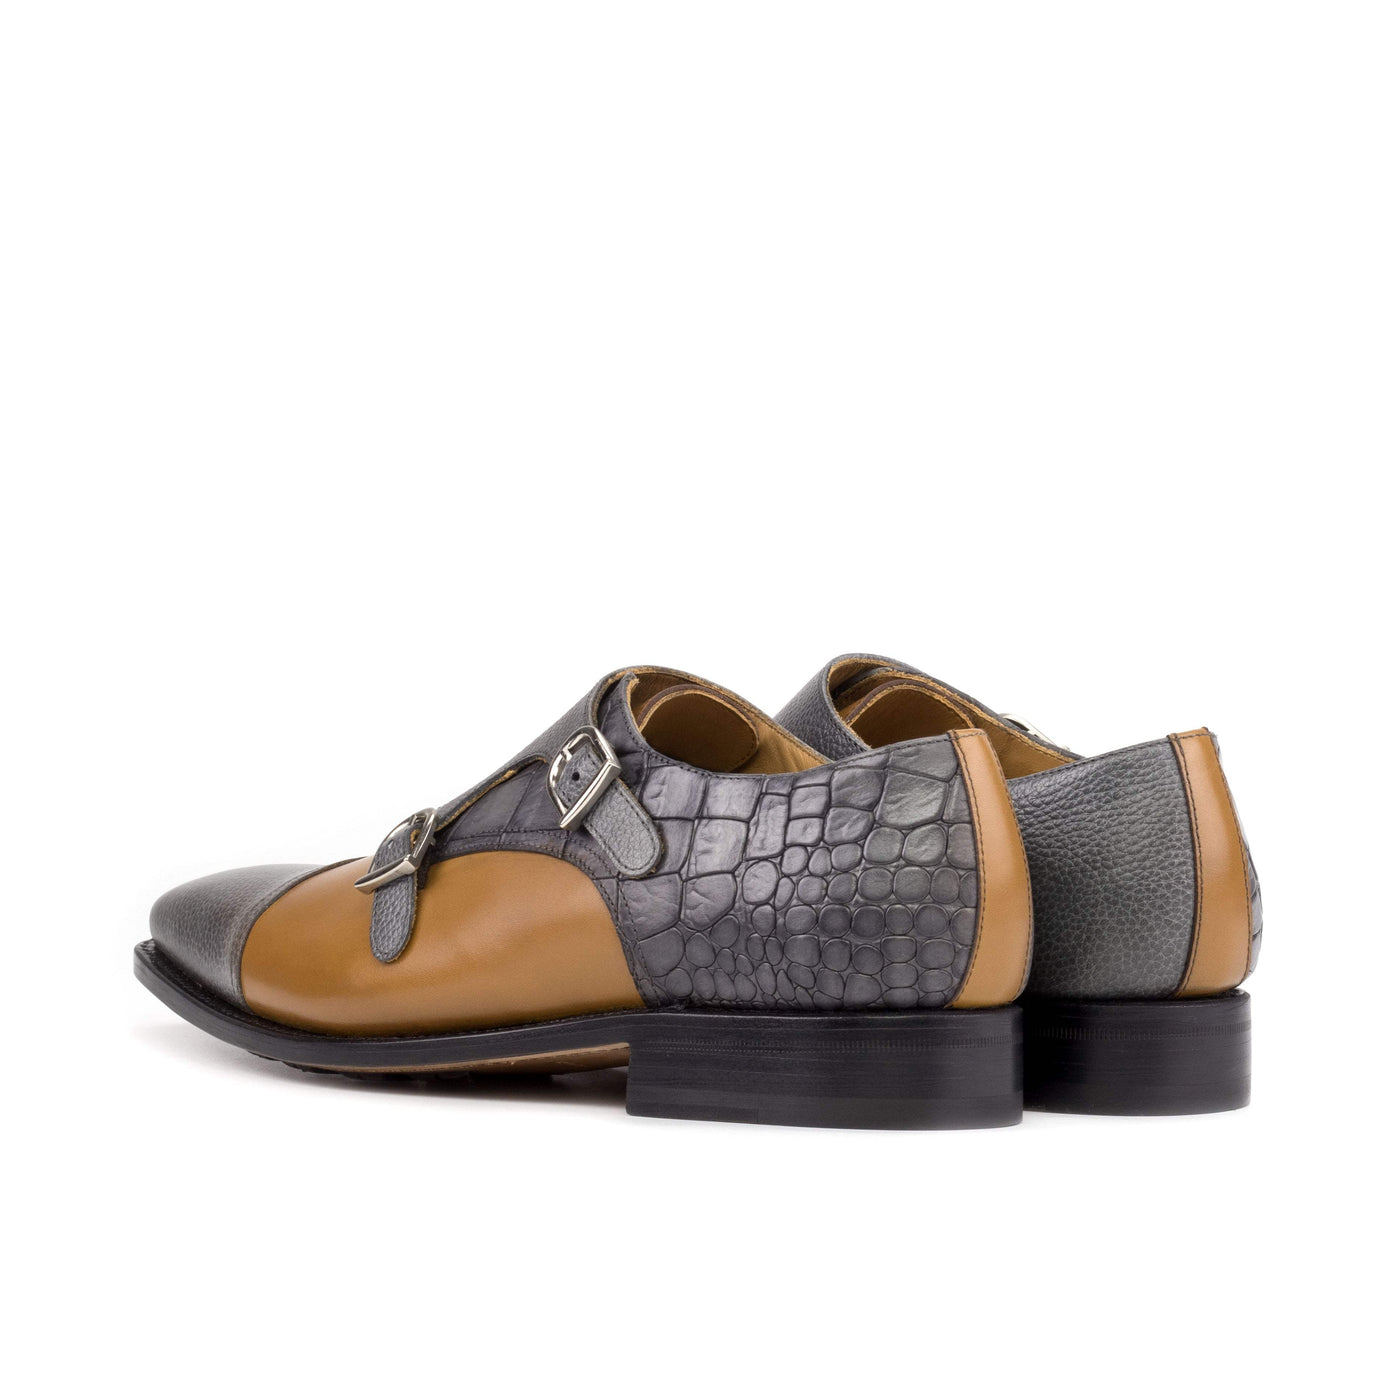 Men's Double Monk Shoes Leather Goodyear Welt Brown Grey 5722 4- MERRIMIUM